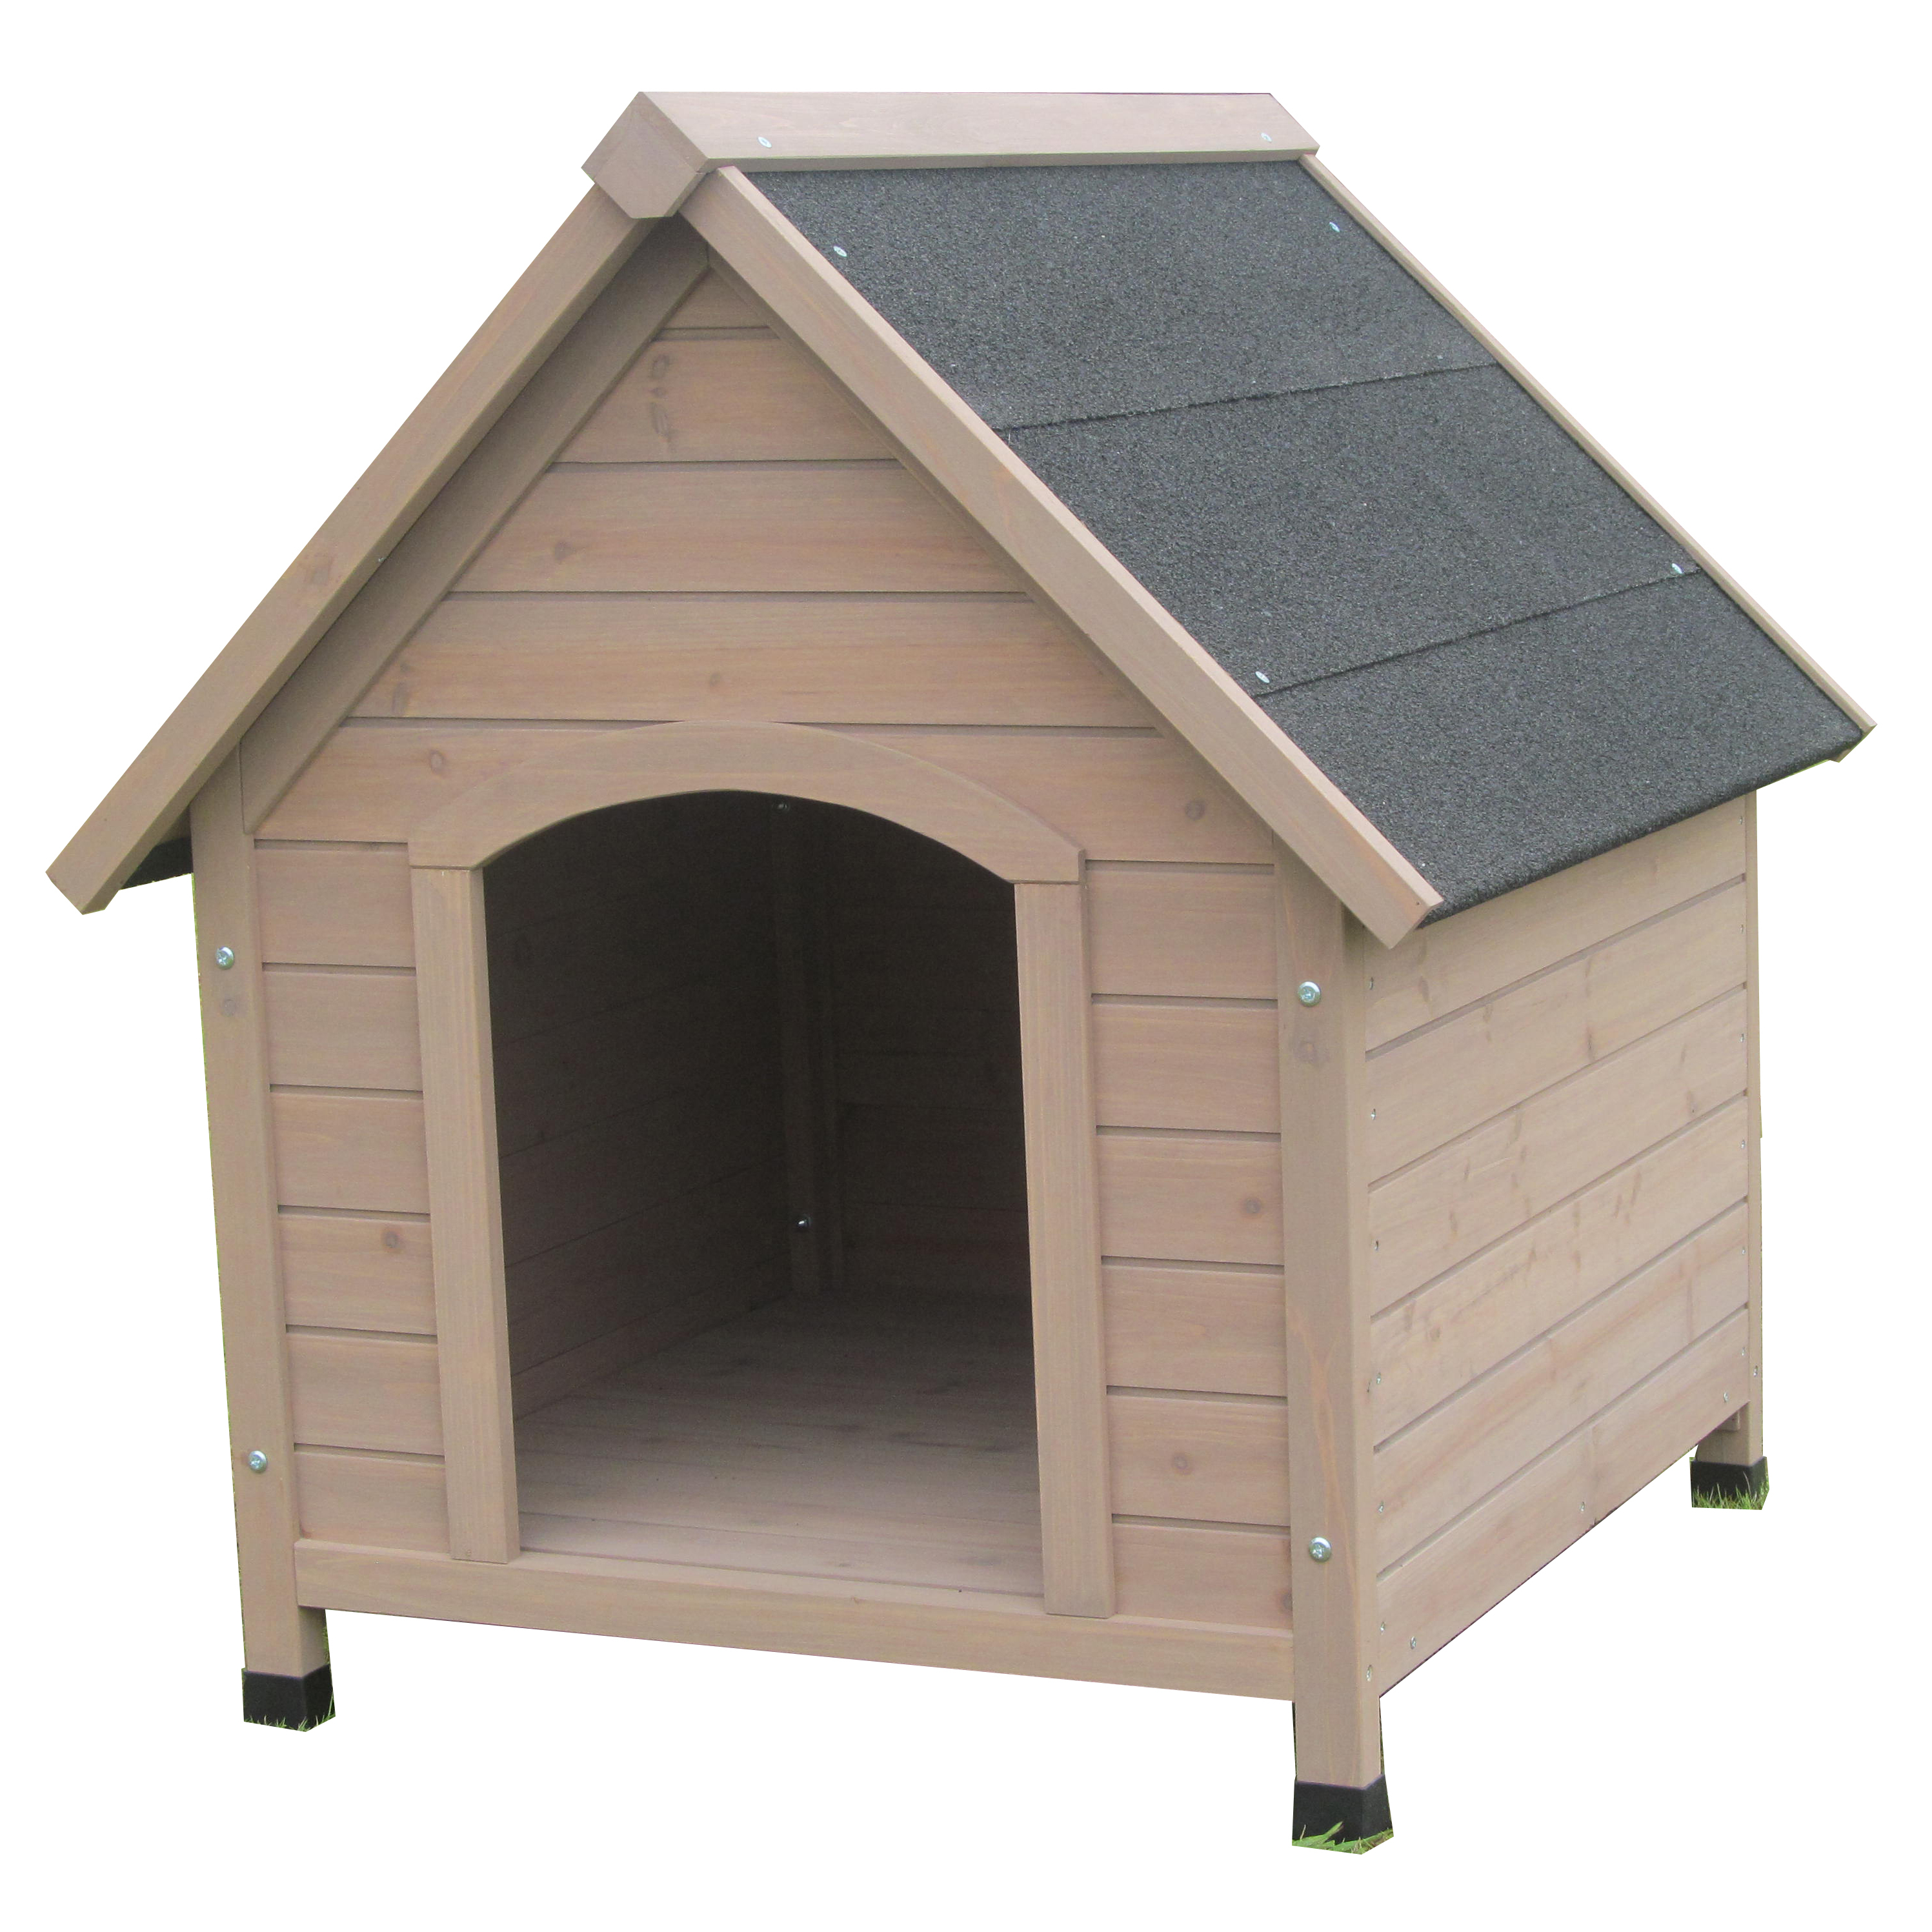 Professional designed Best selling waterproof outdoor wooden dog kennel